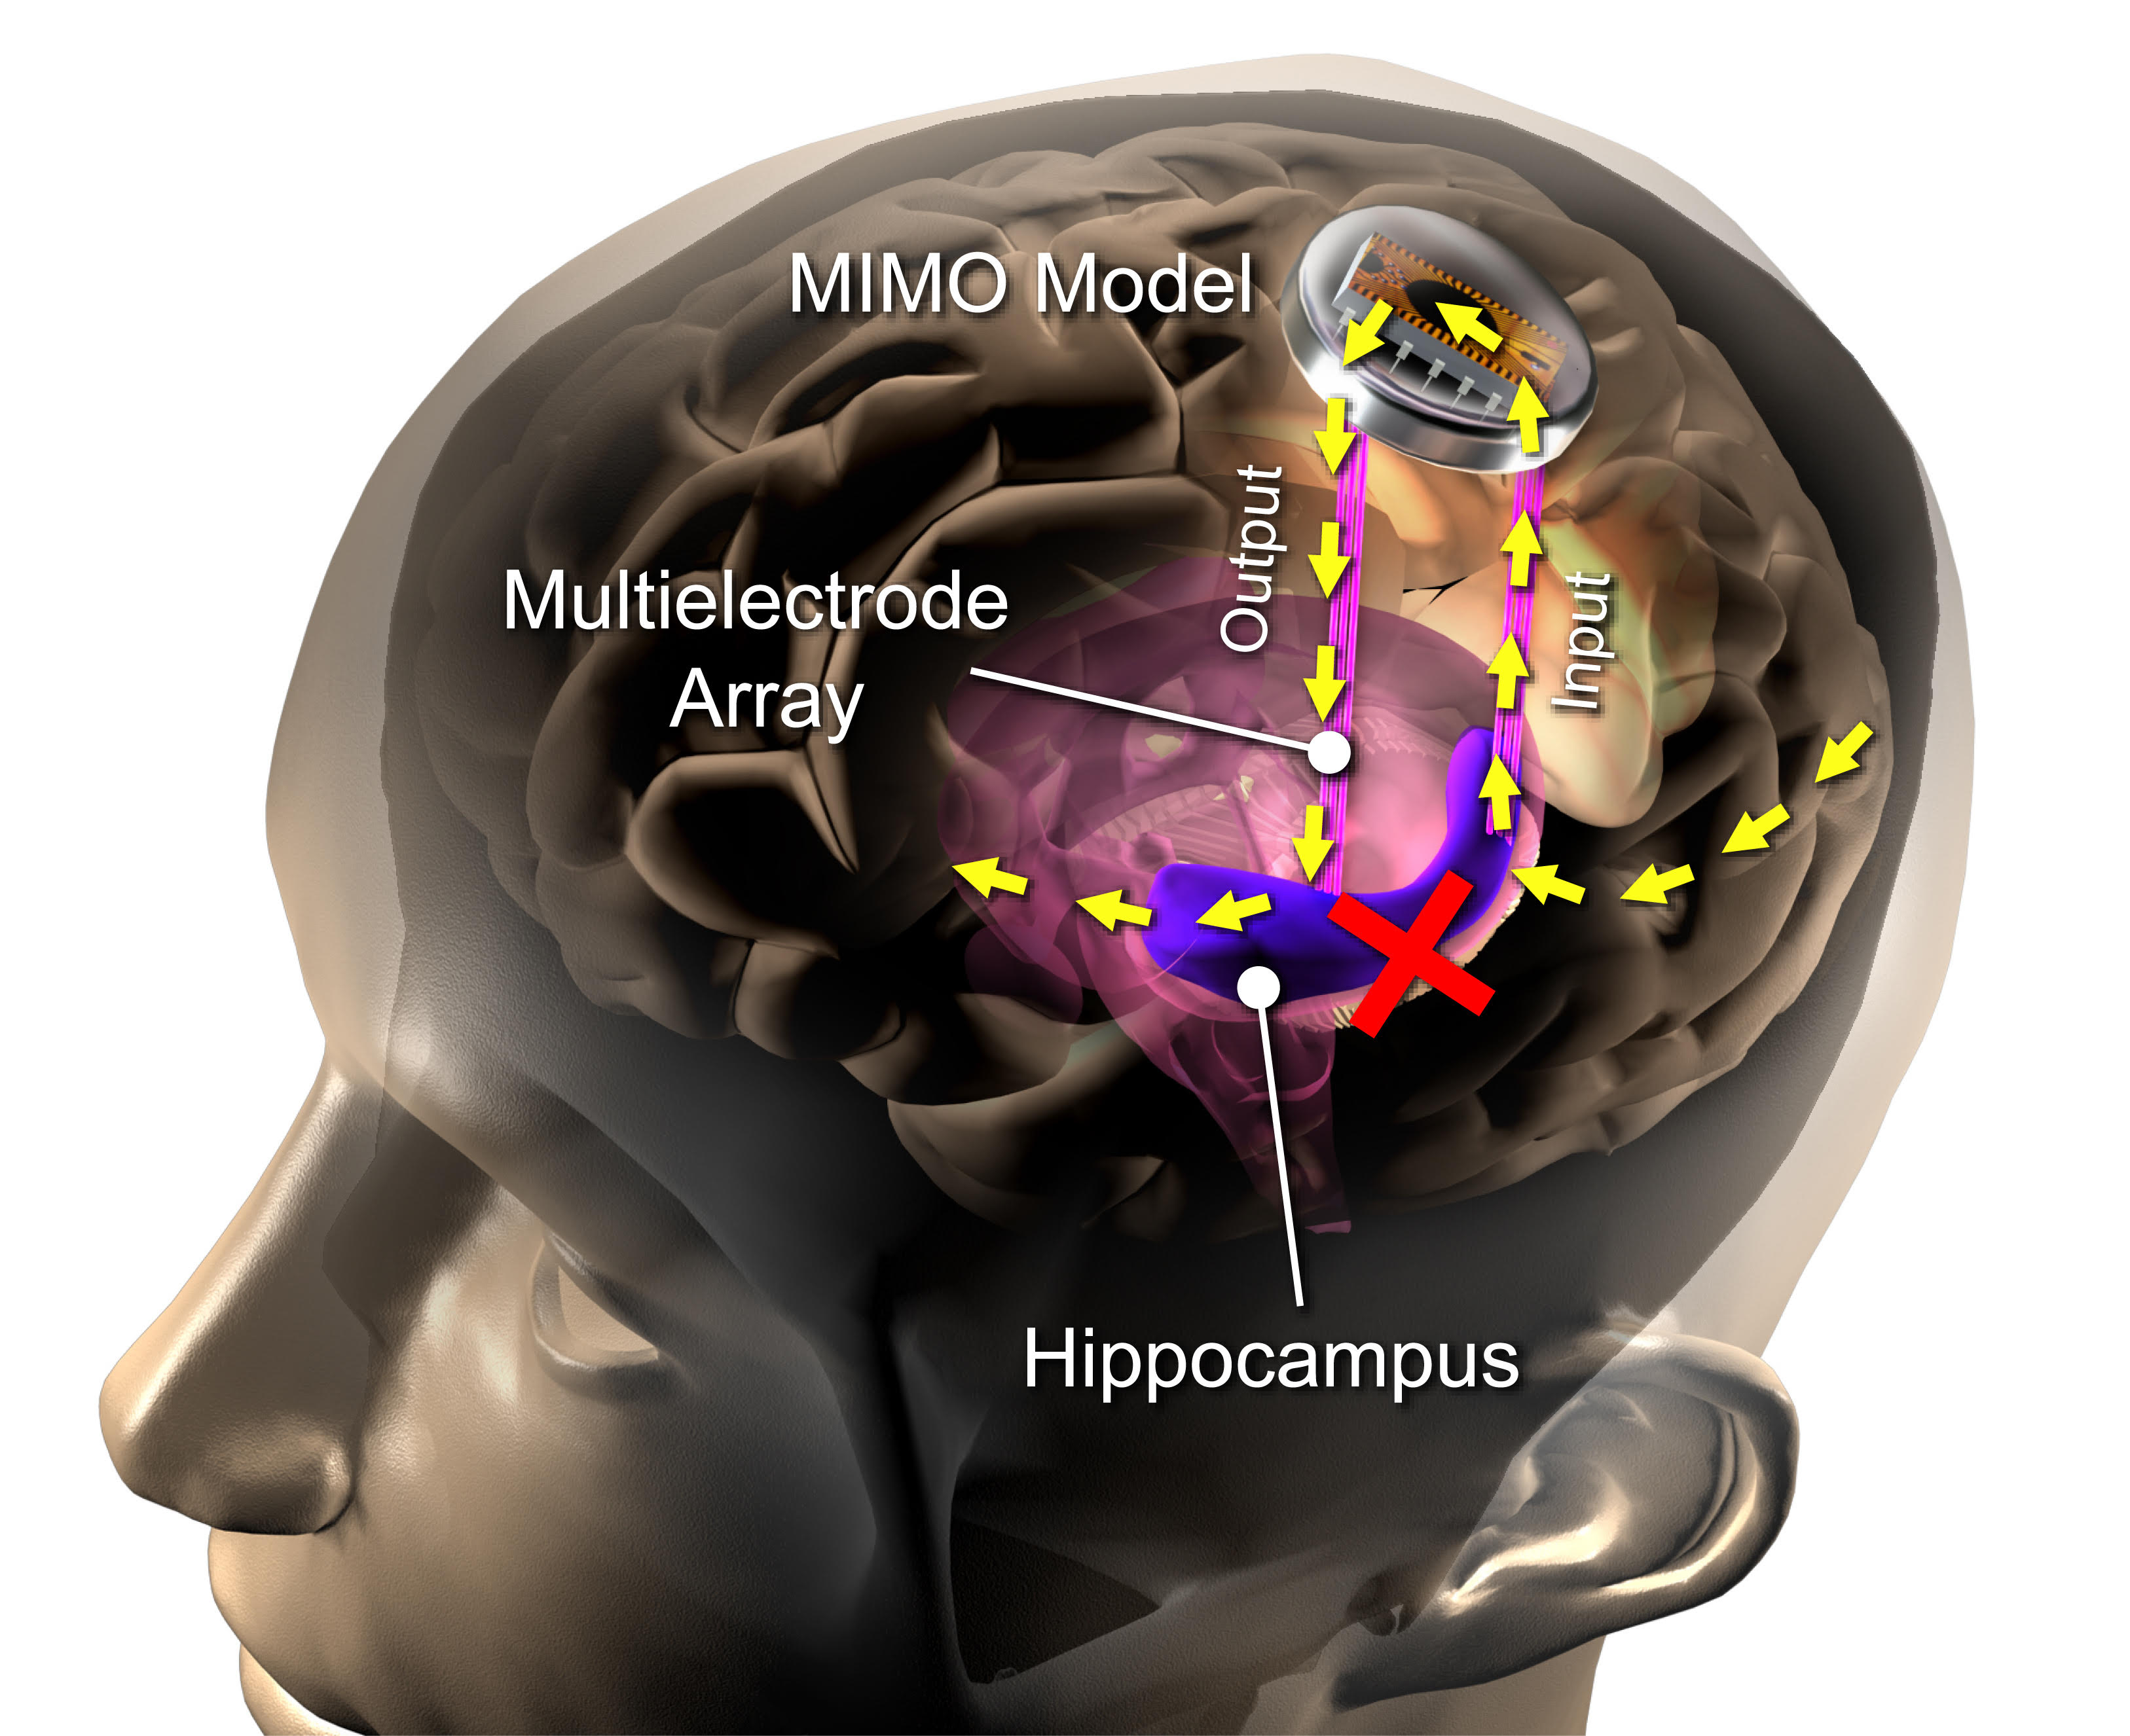 Usc Researchers Develop Brain Implant To Improve Memory Daily Trojan